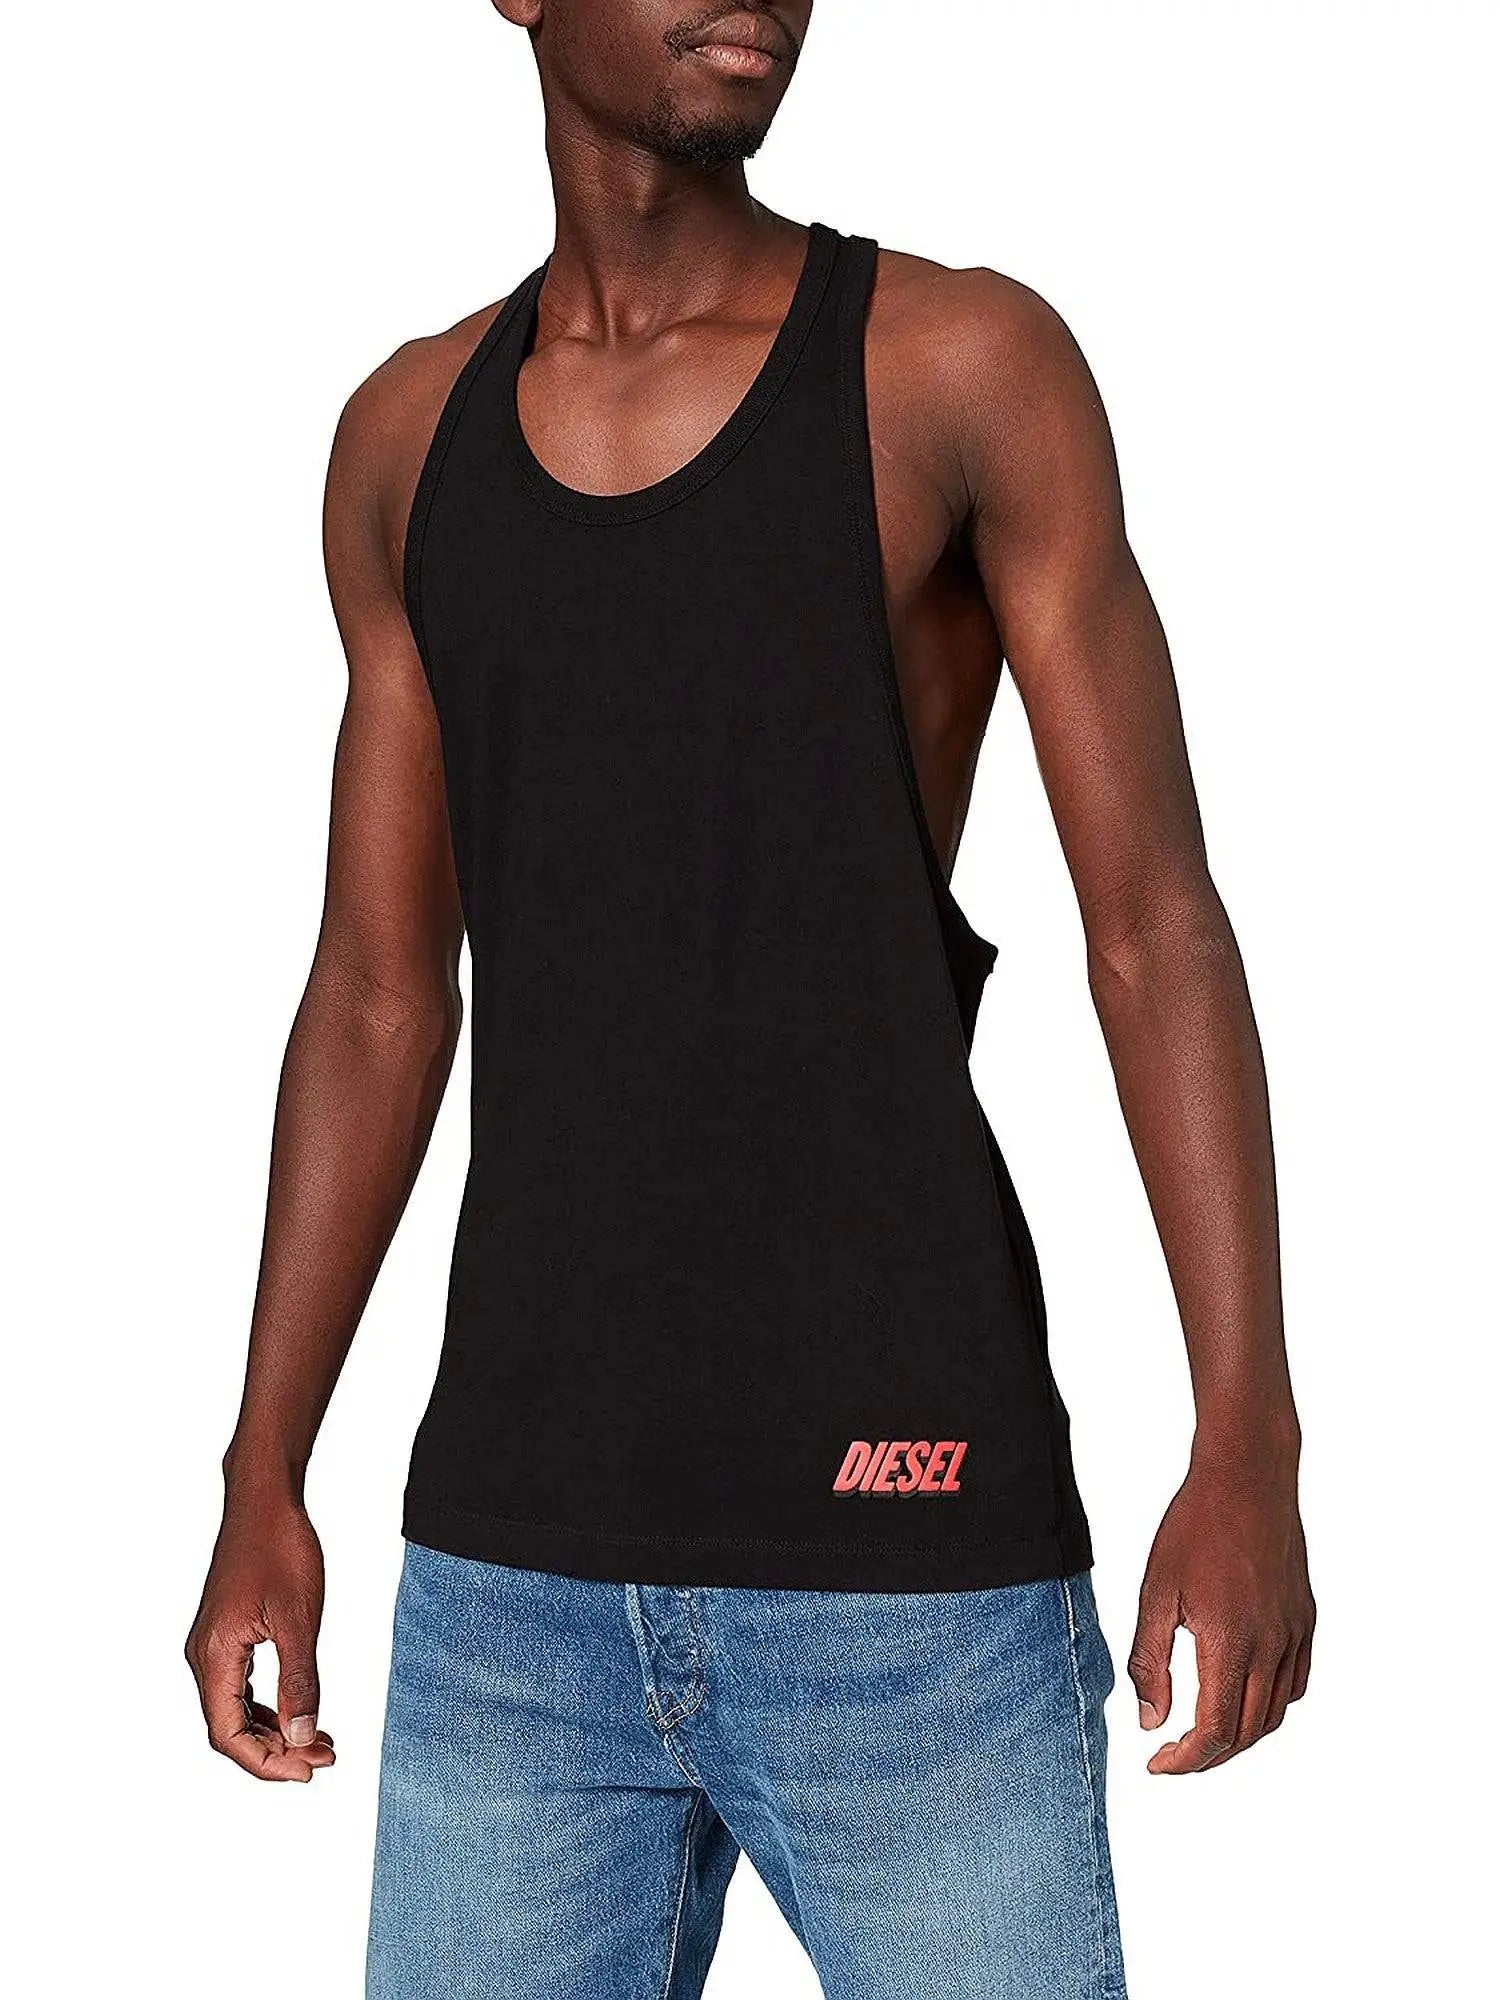 DIESEL UMTK-LOCO-ELAS - Tank Top Fitness Stringer Muscleshirt Gym Trainingsshirt - noodosz